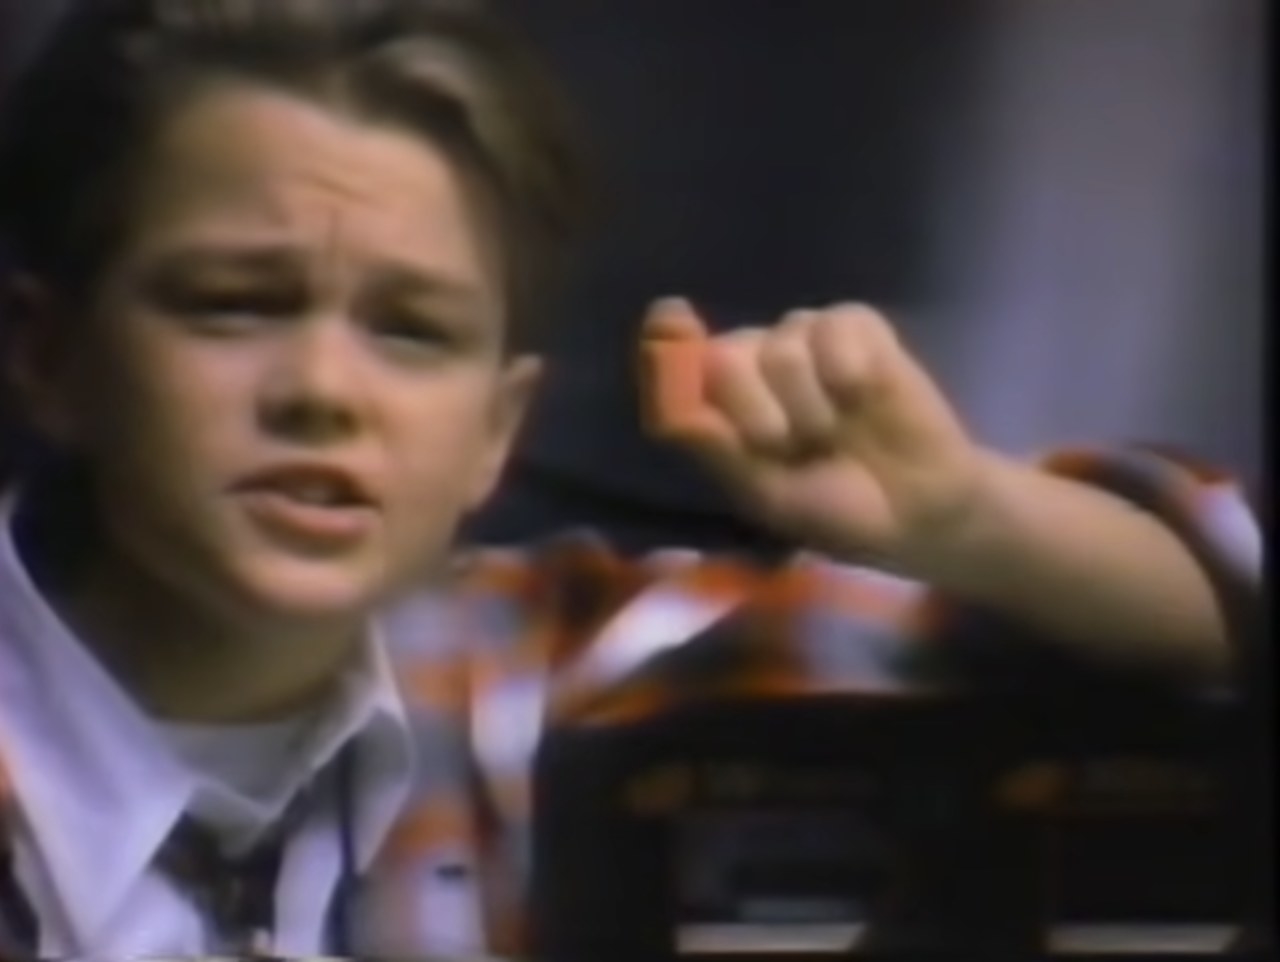 Leonardo DiCaprio in a Bubble Yum commercial in the 1980s